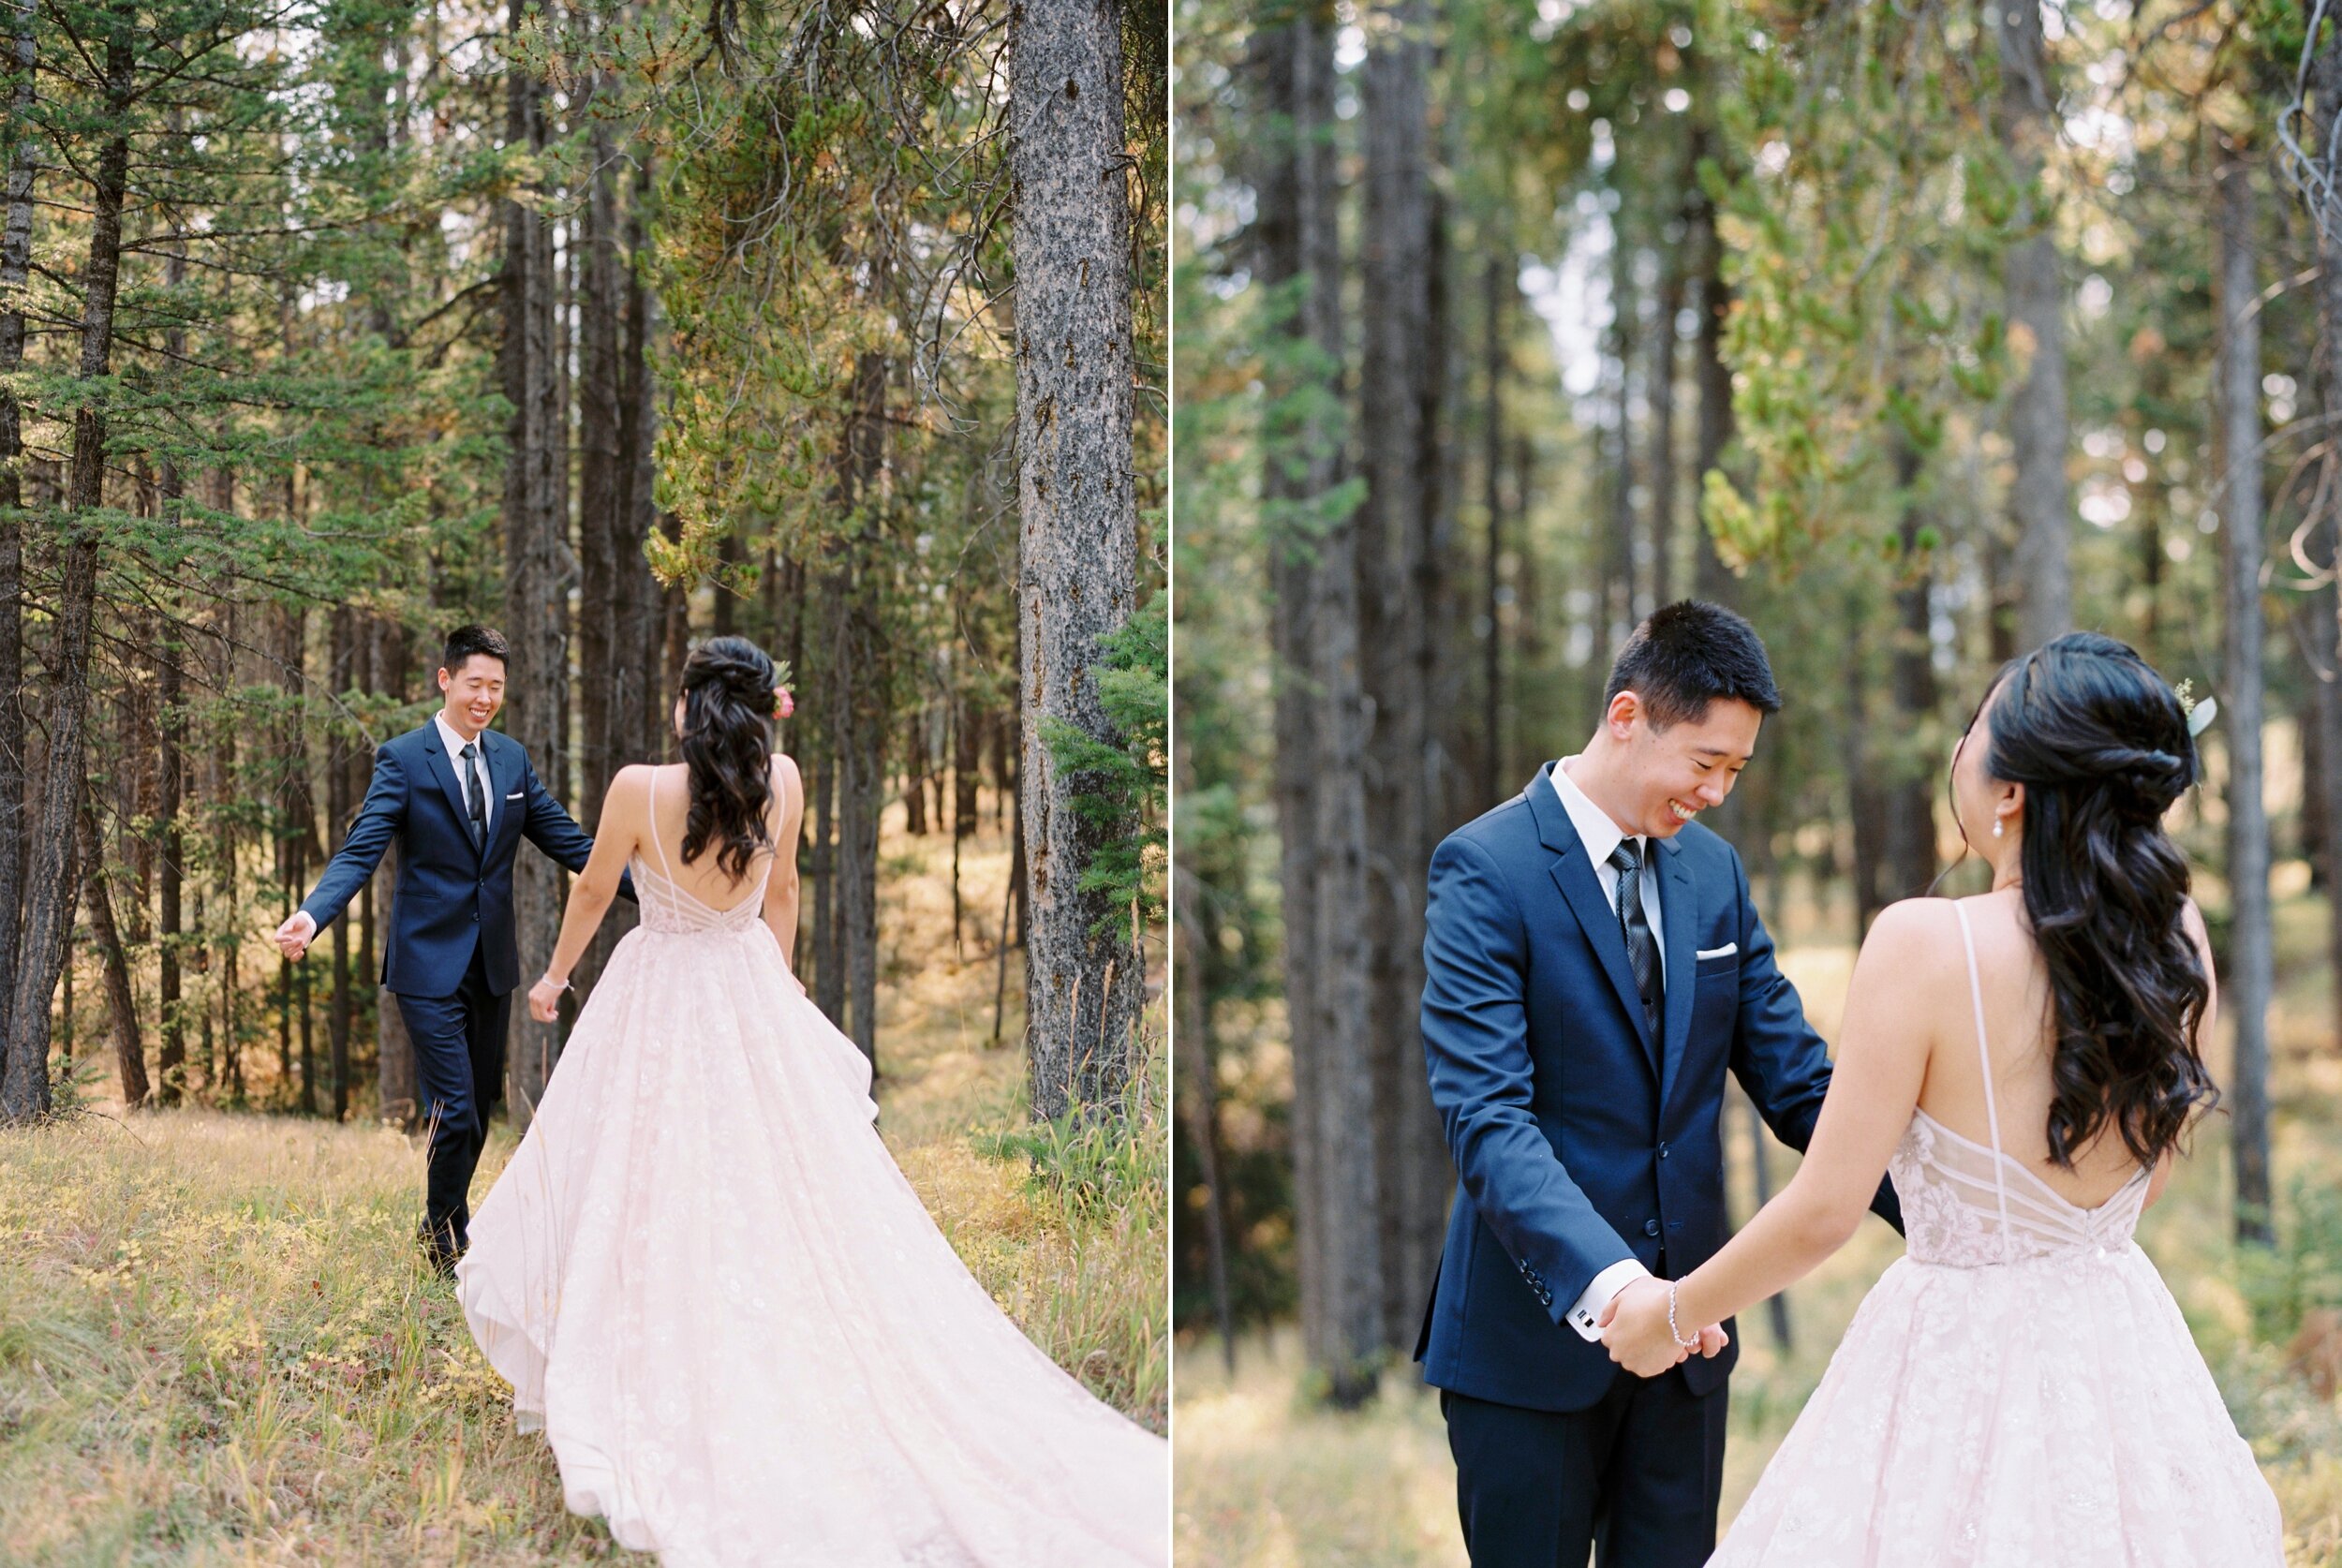  Banff wedding photographer | intimate wedding elopement | first look | Justine milton photography 